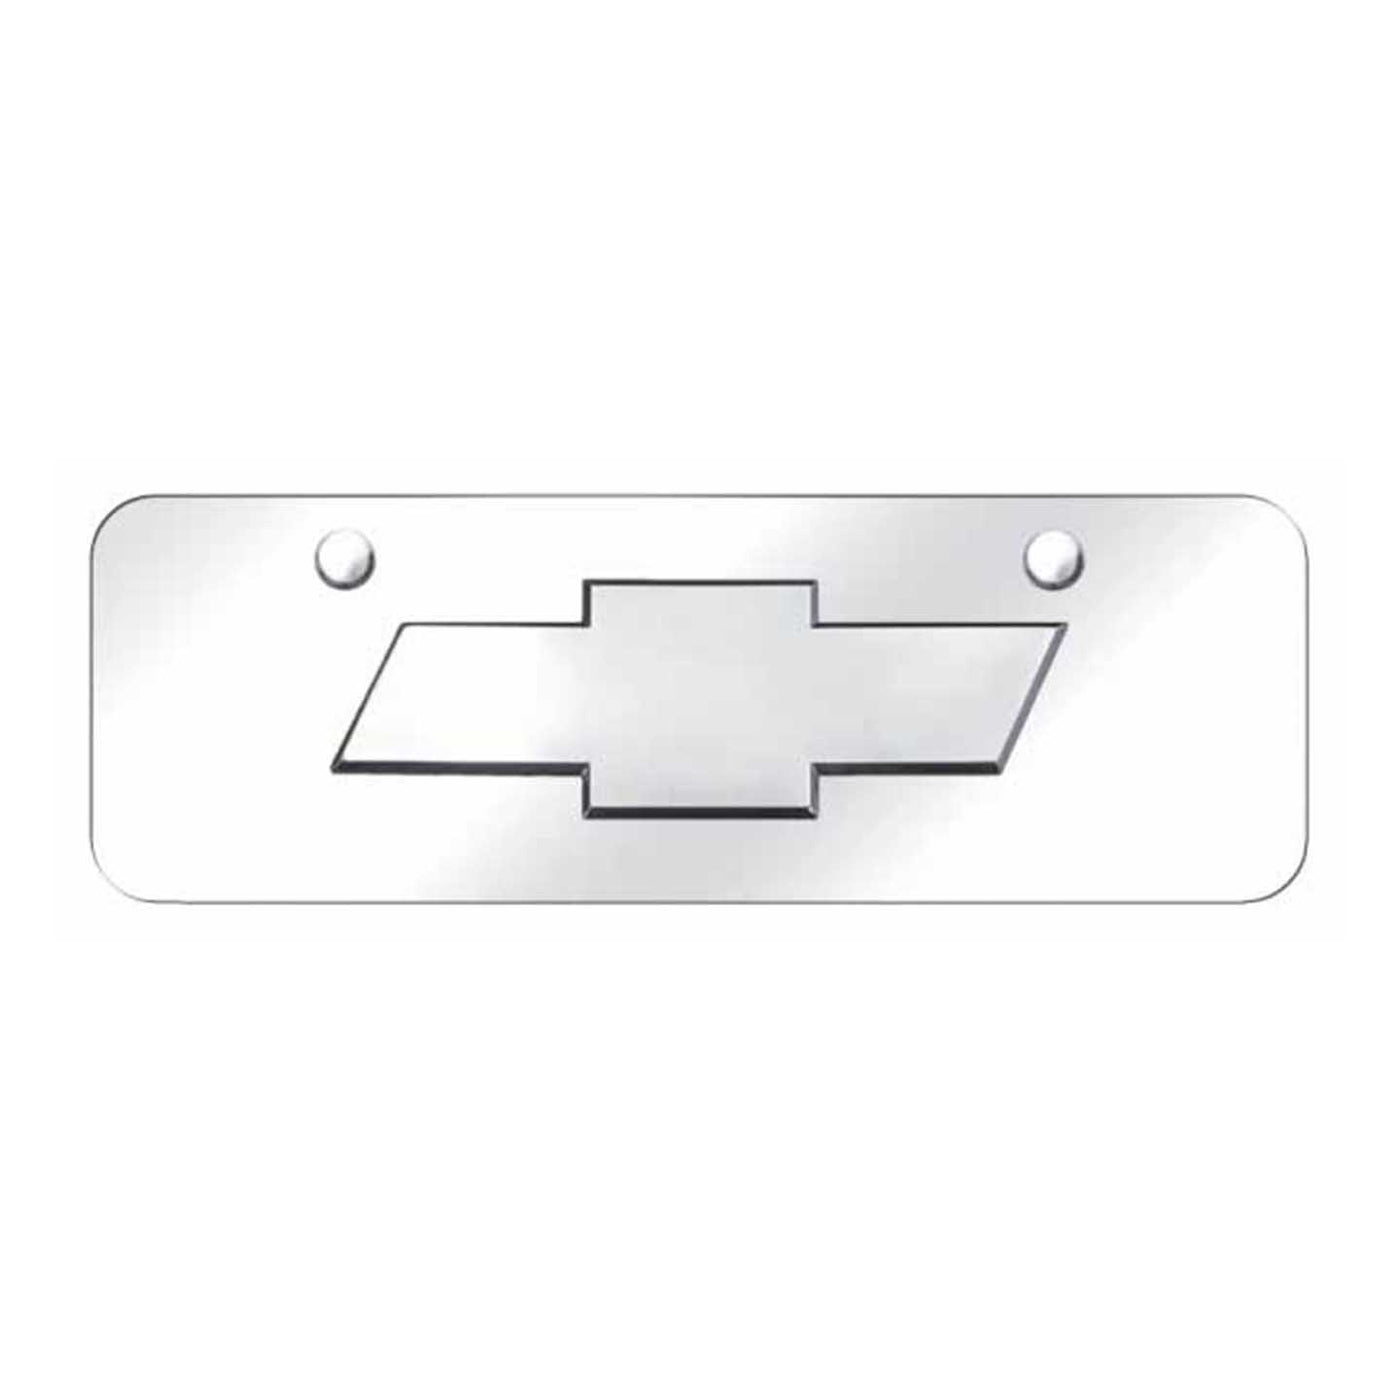 Chevrolet (New) Mini Plate - Chrome on Mirrored